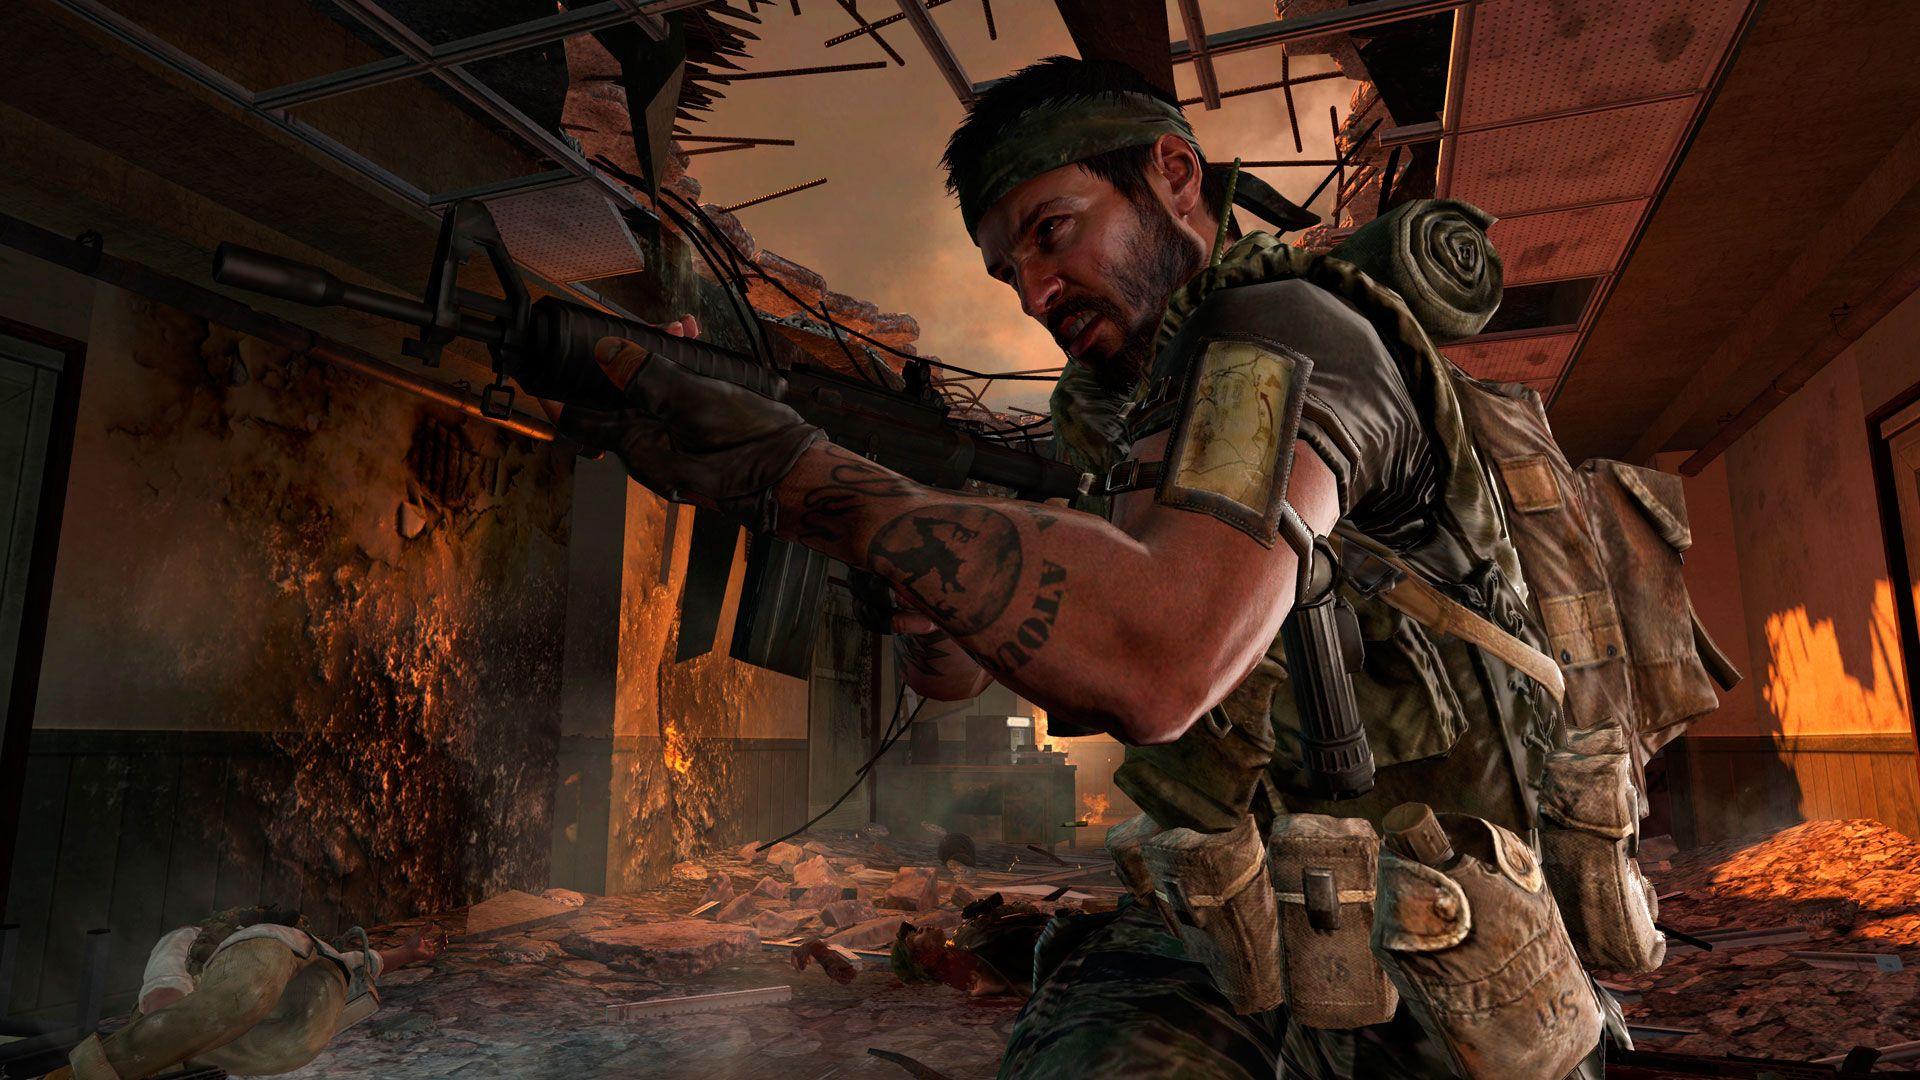 Call of Duty: Black Ops Wallpaper in HD